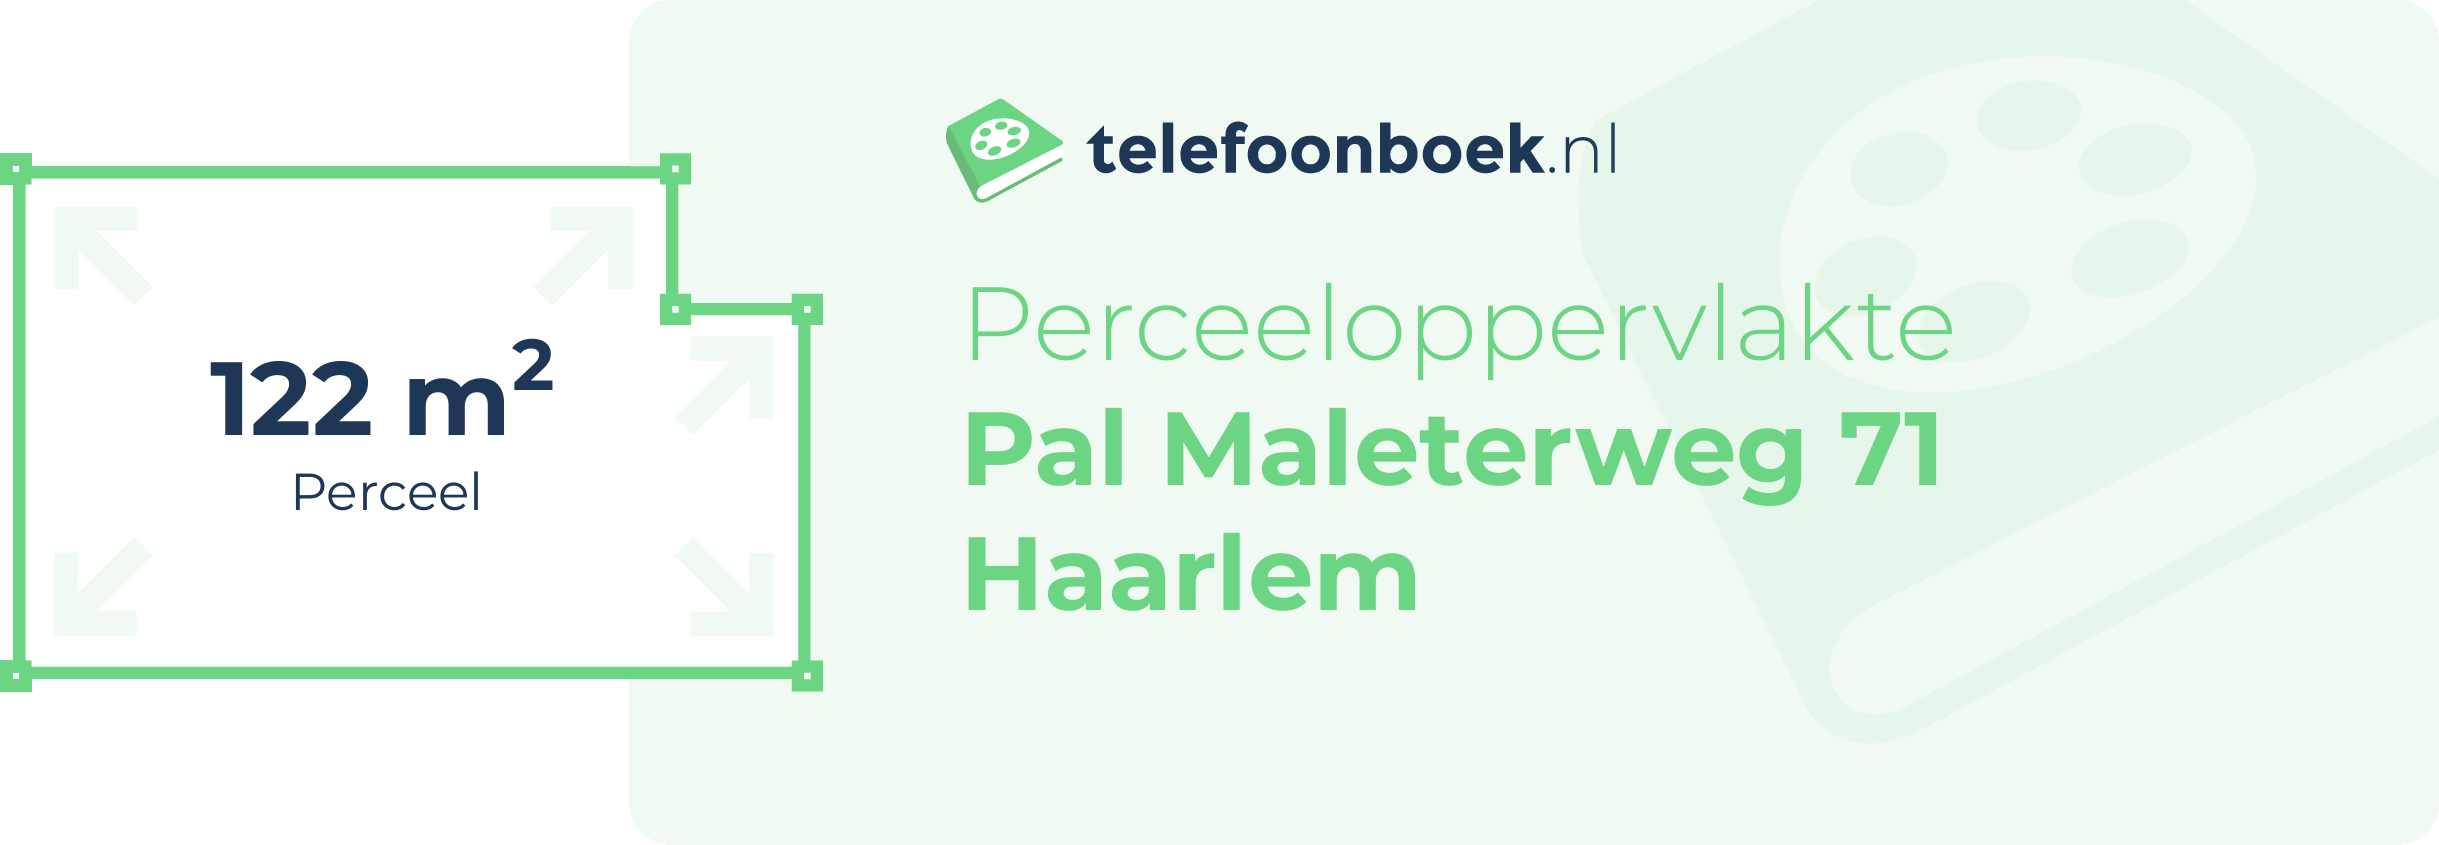 Perceeloppervlakte Pal Maleterweg 71 Haarlem